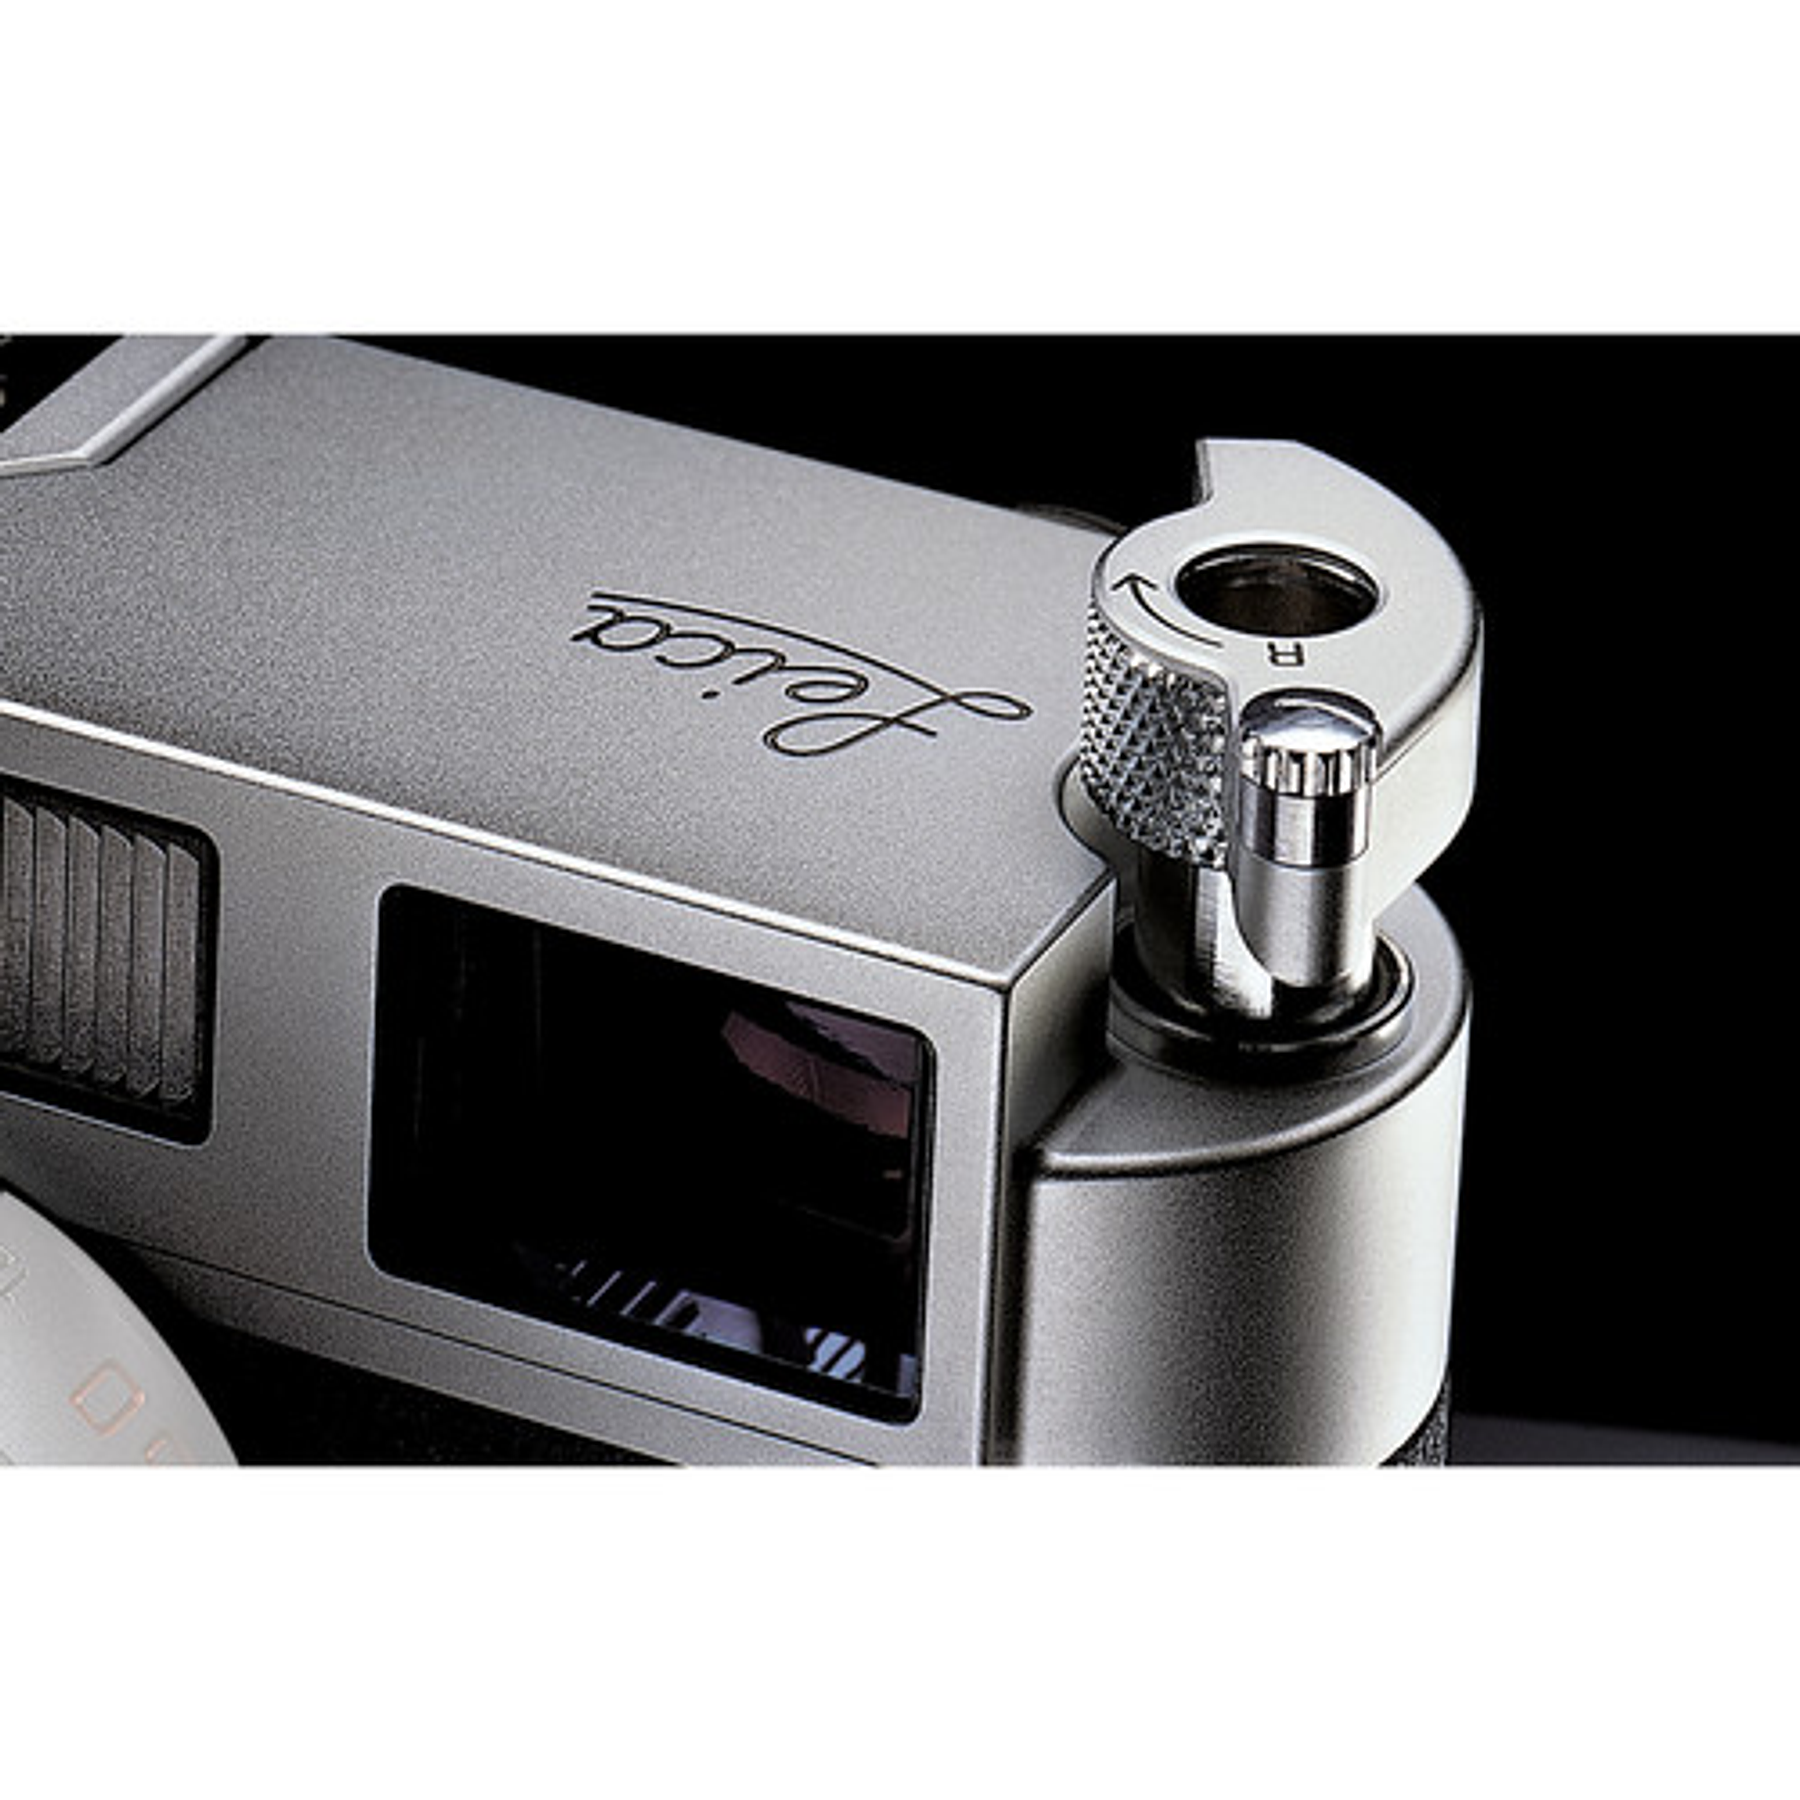  Leica MP 0.72 Rangefinder Camera (Silver)